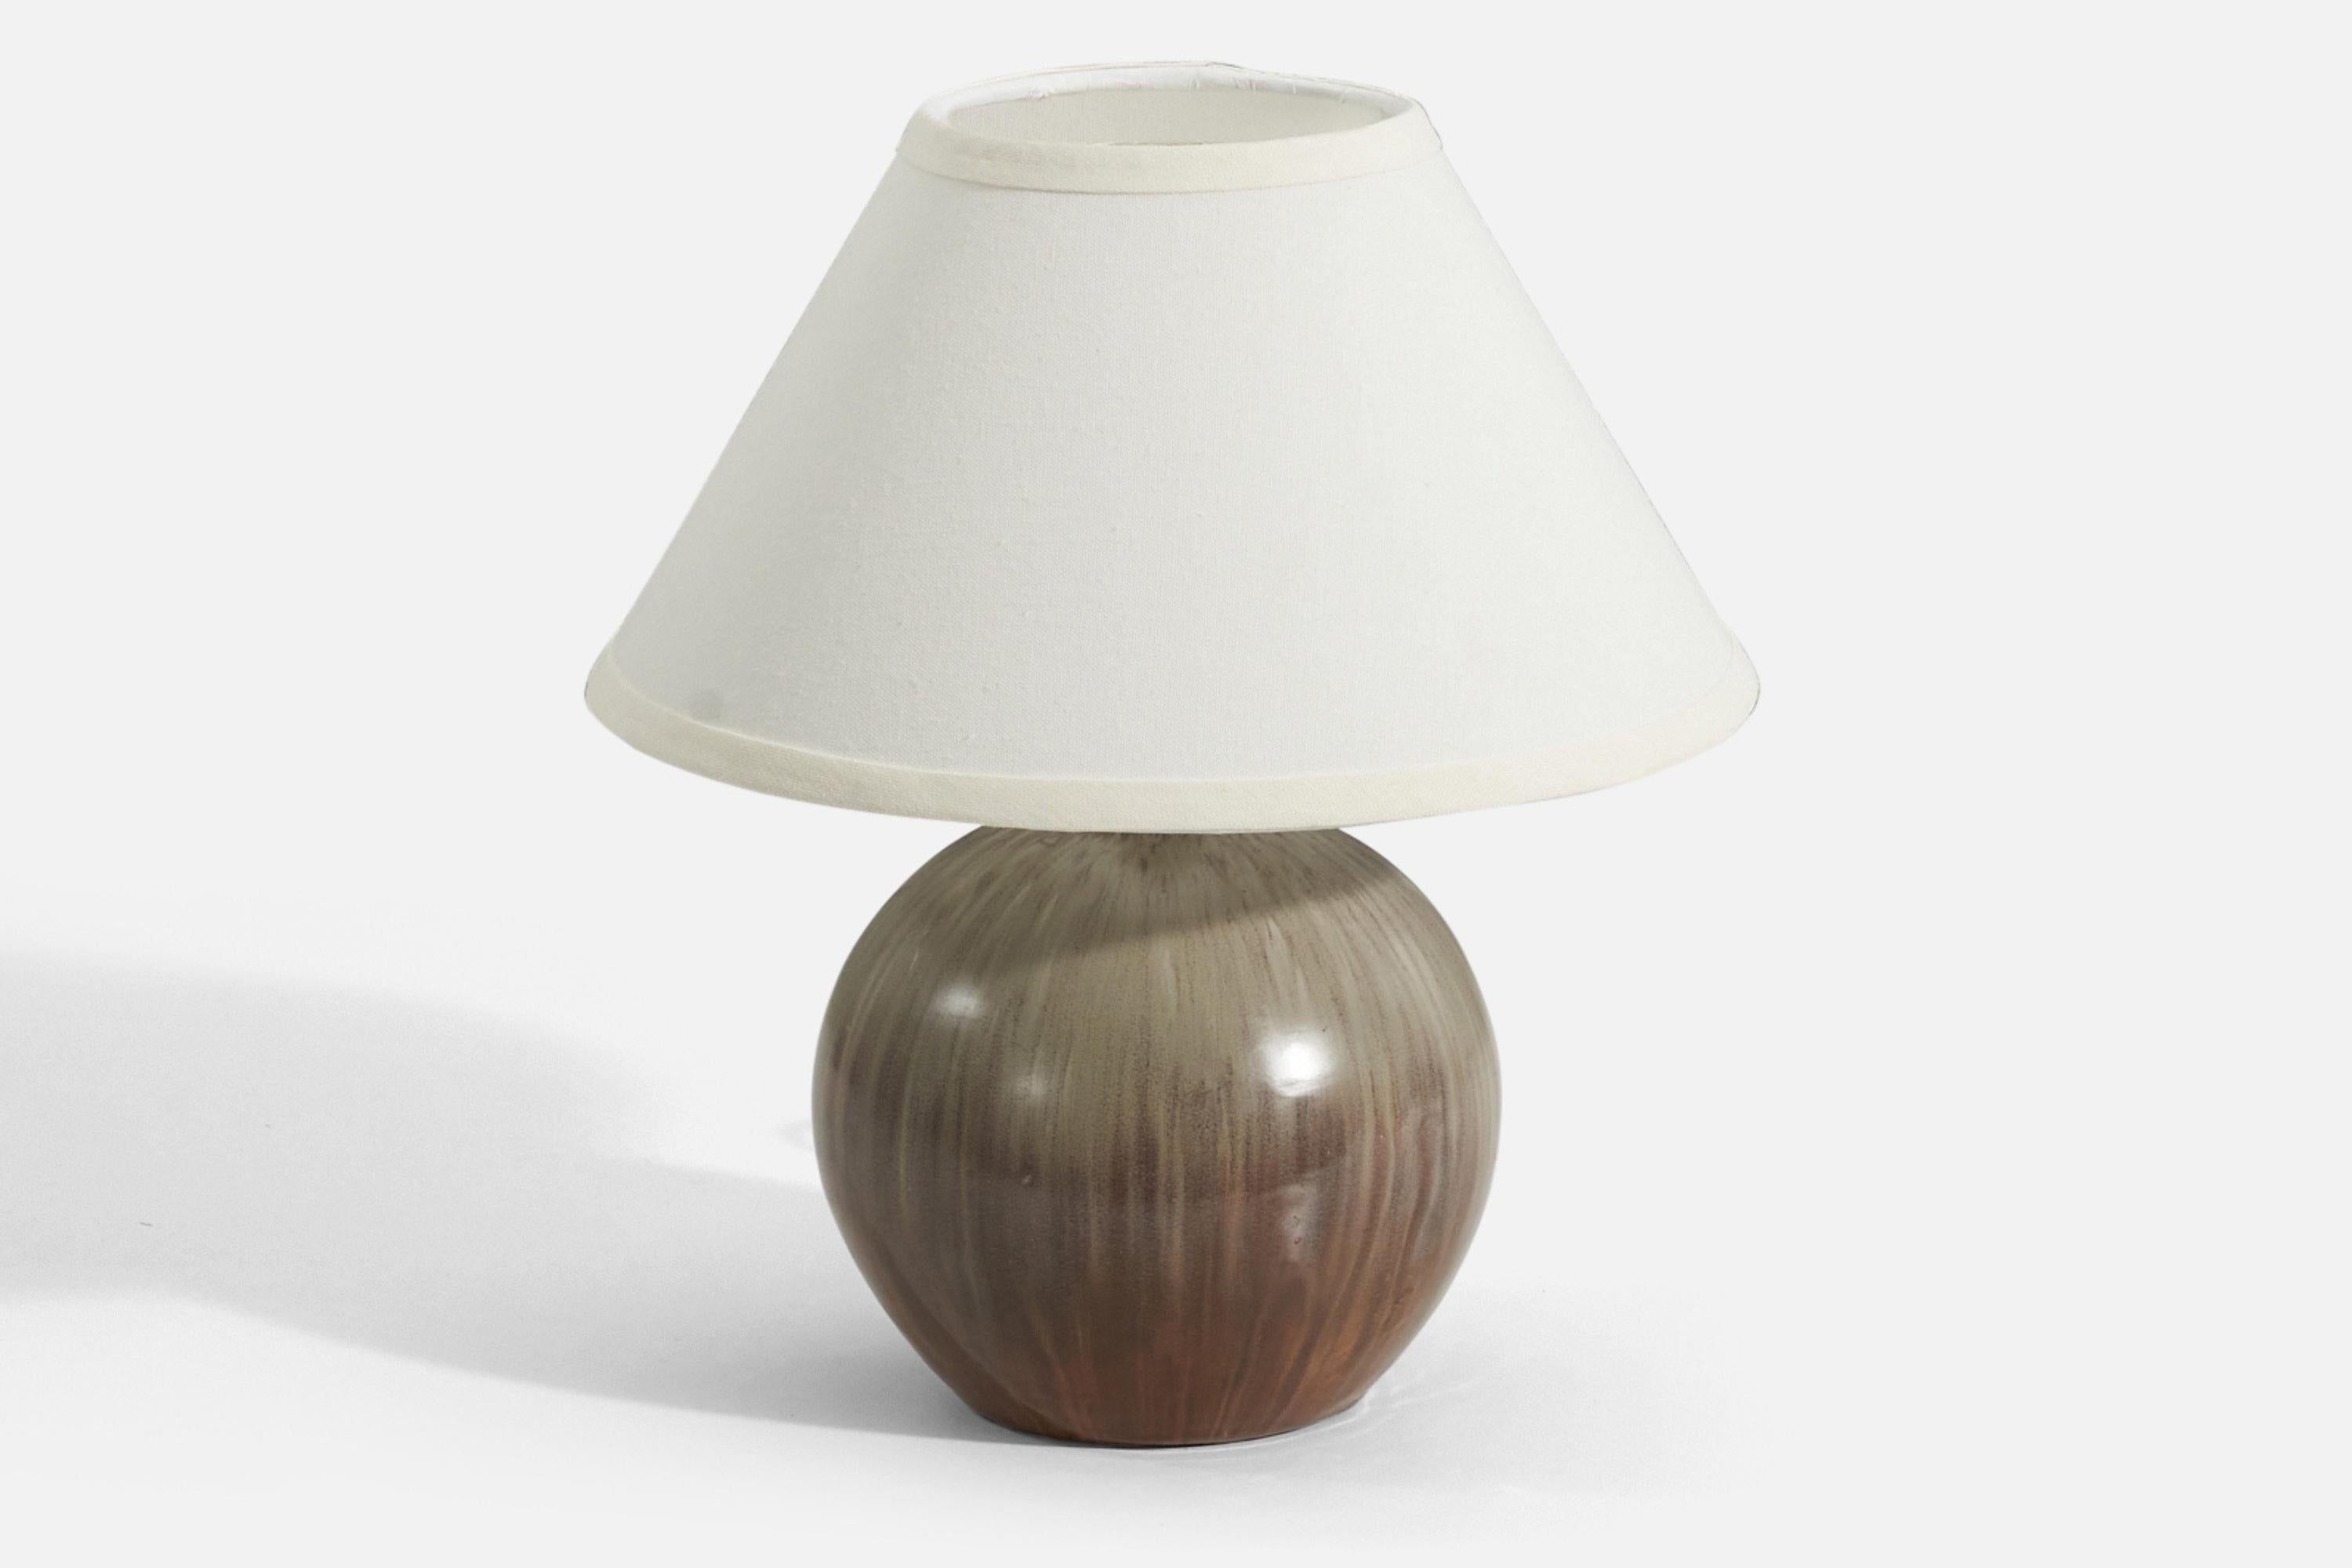 Scandinavian Modern Danish Designer, Table Lamp, Grey and Brown-Glazed Stoneware, Denmark, 1940s For Sale